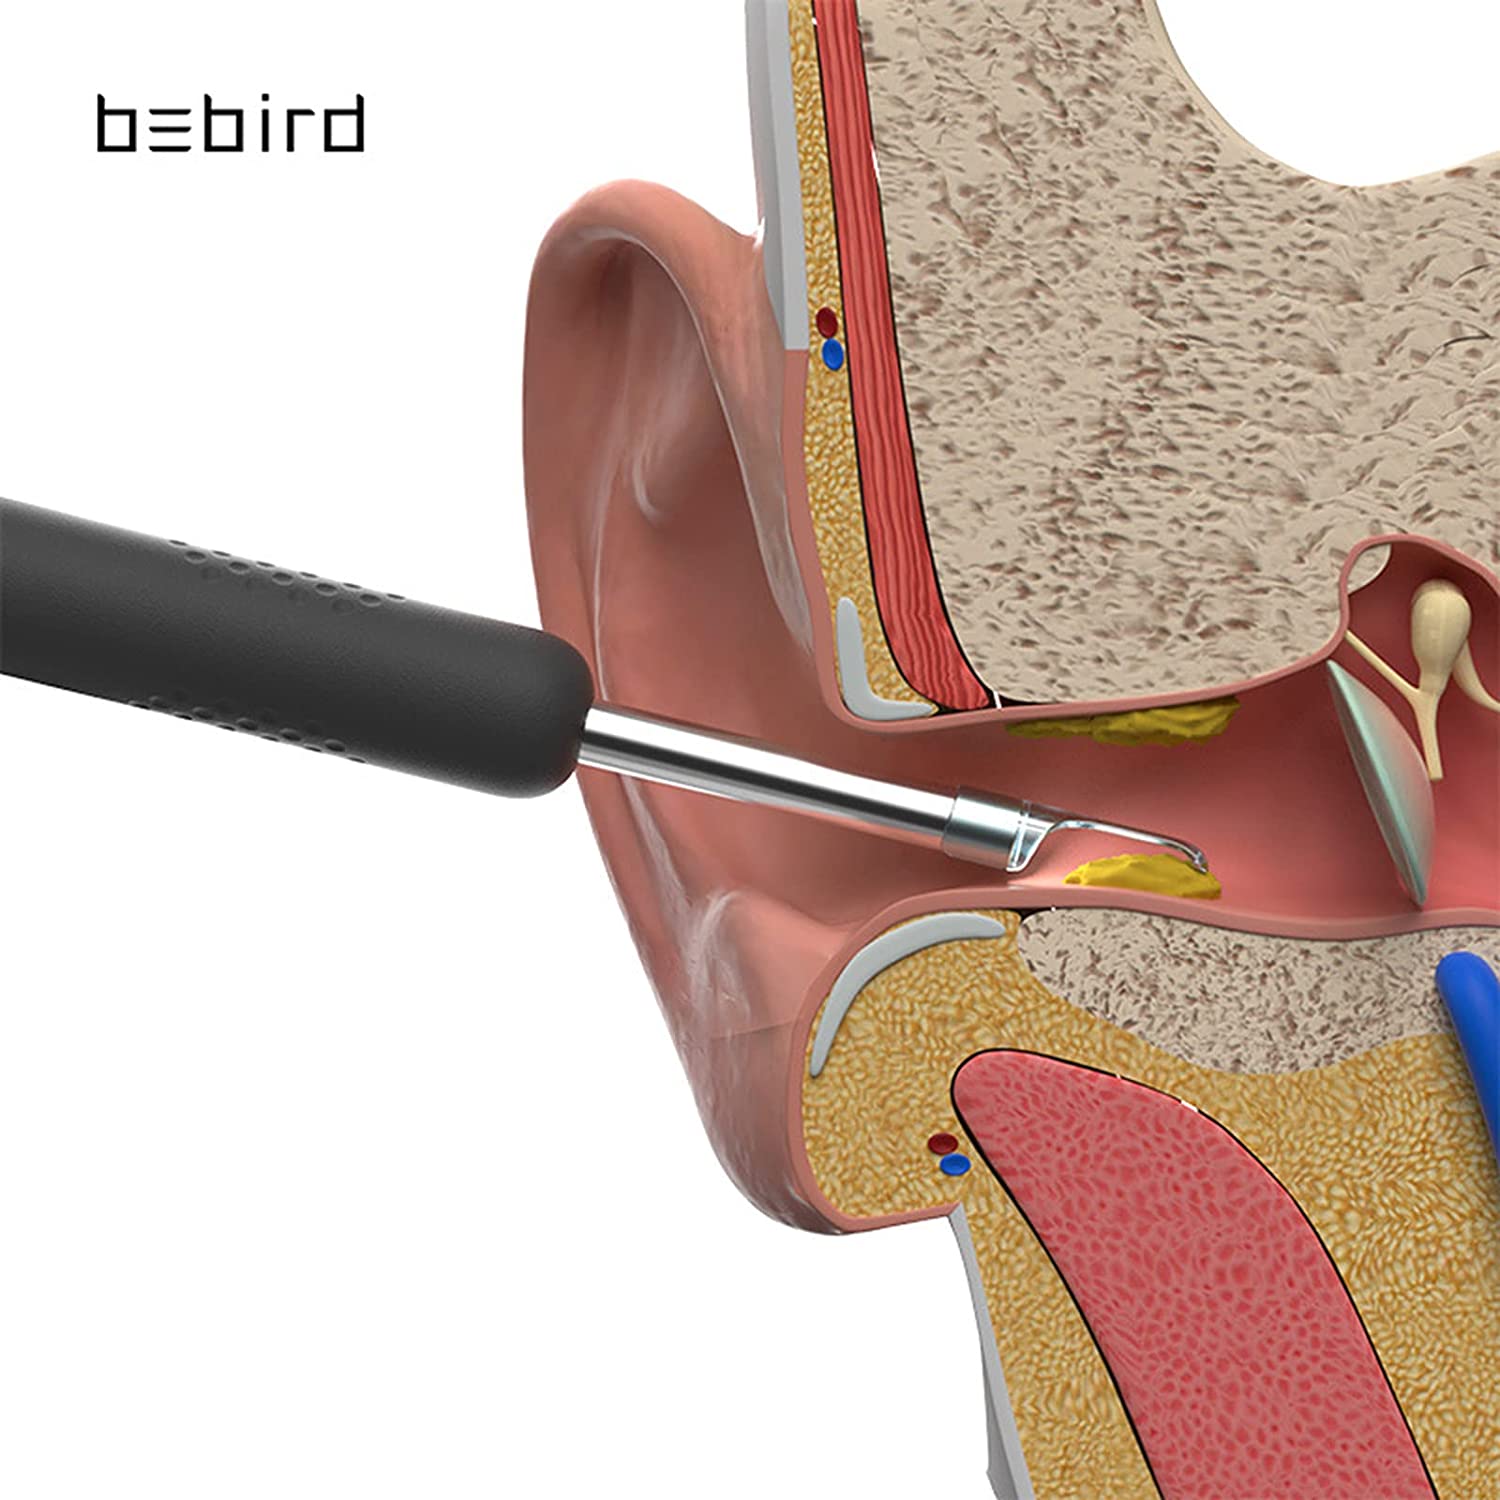 Bebird Smart Earwax Removal Tool R1 - Black